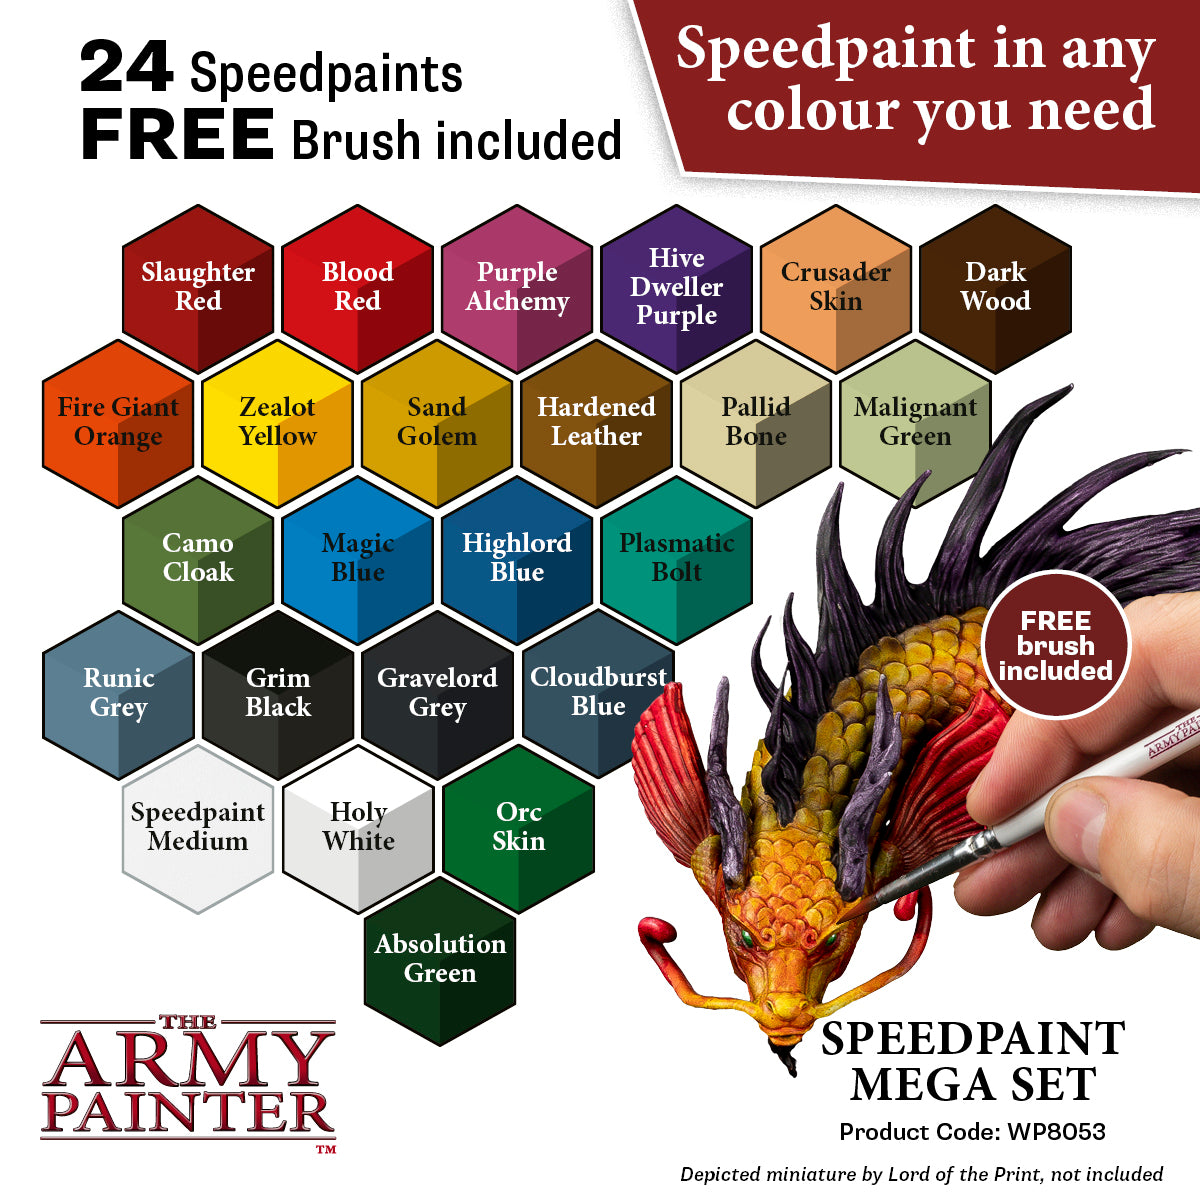 The Army Painter - Speedpaint 2.0 - Mega Set at Mepel